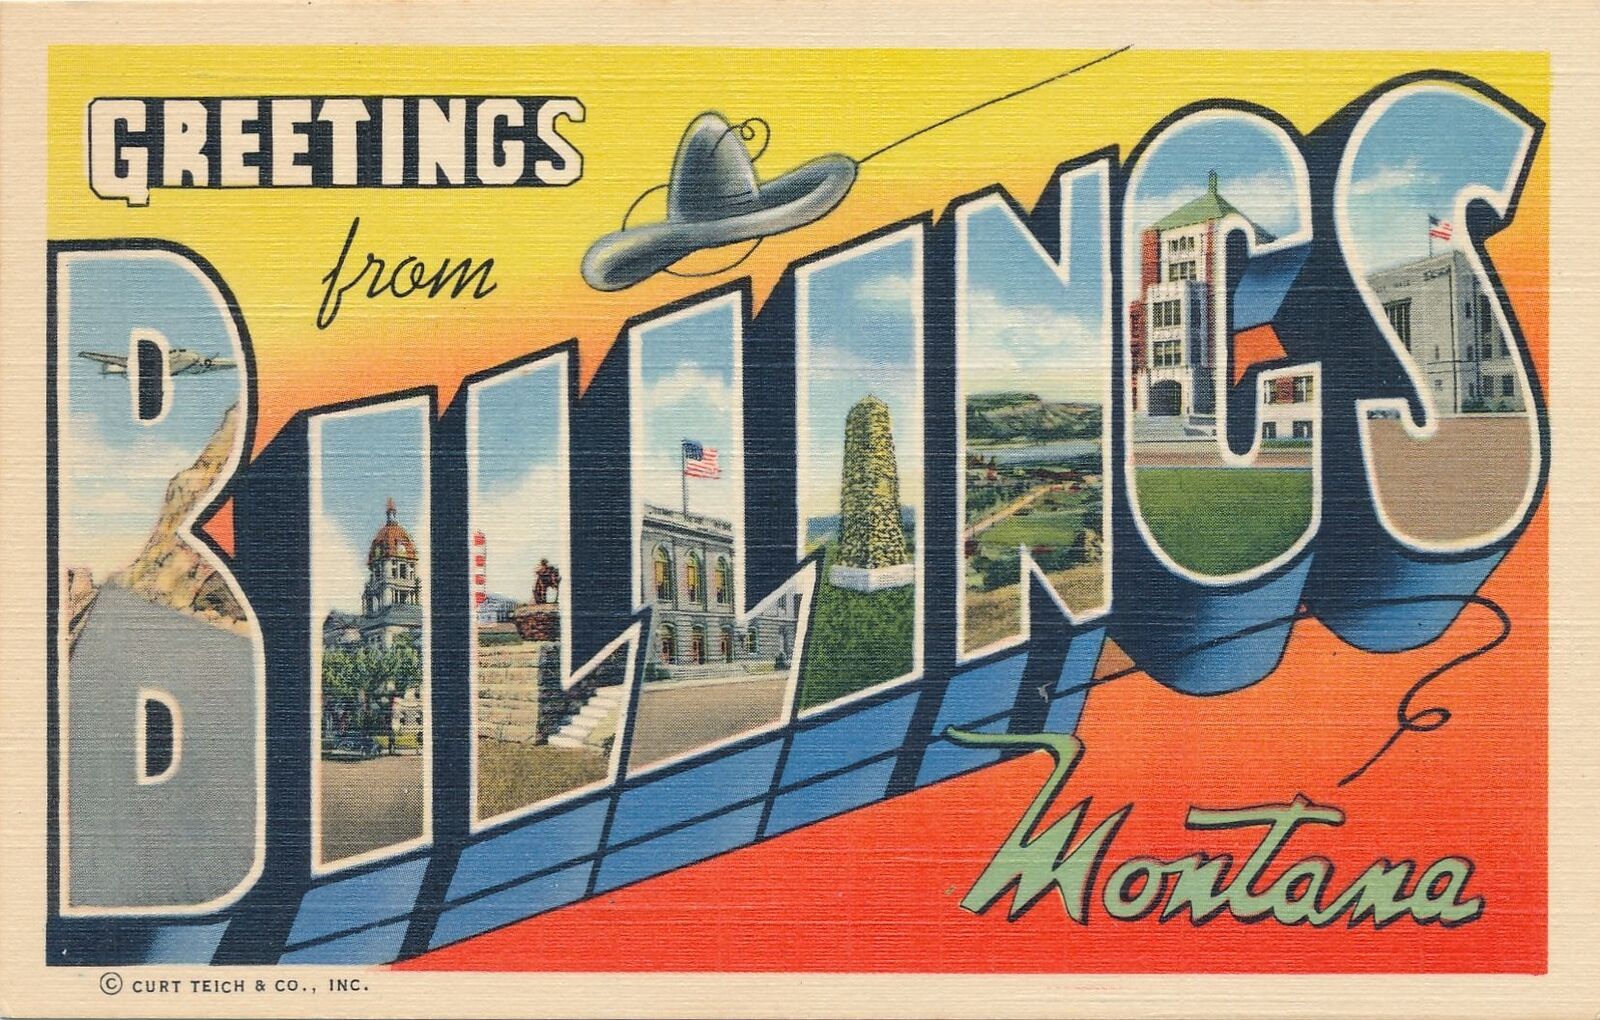 BILLINGS MT - Greetings From Billings Postcard